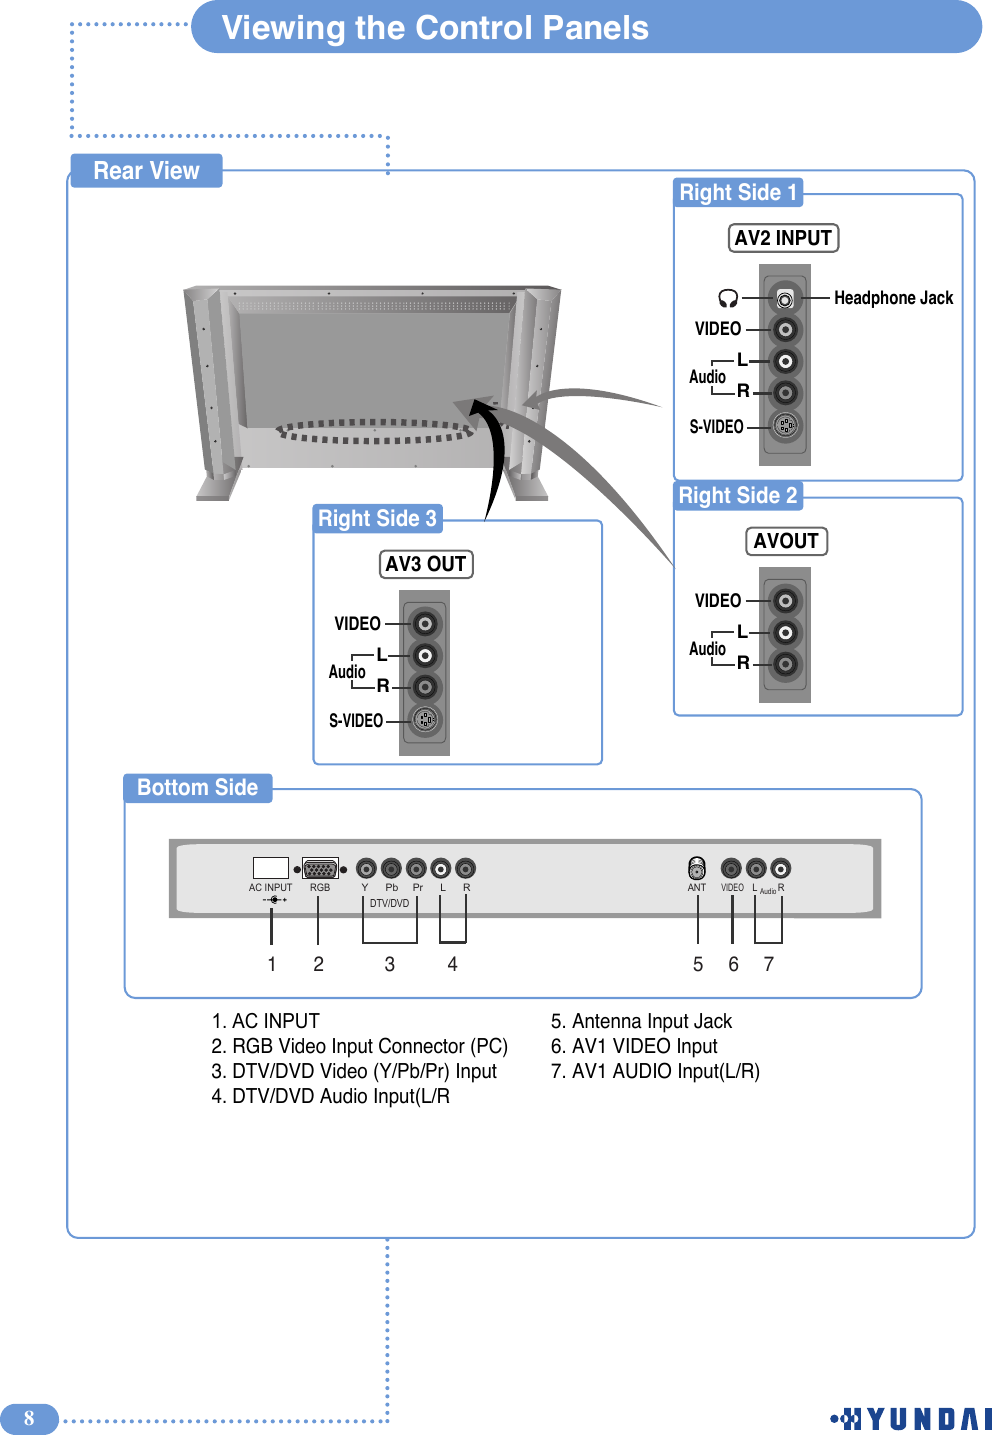 Bottom Side8Viewing the Control PanelsRear ViewRight Side 1 LRAV2 INPUTAC INPUT RGBY      Pb     Pr      L      R       VIDEOL        RANTDTV/DVDAudio1. AC INPUT2. RGB Video Input Connector (PC)3. DTV/DVD Video (Y/Pb/Pr) Input4. DTV/DVD Audio Input(L/R5. Antenna Input Jack6. AV1 VIDEO Input 7. AV1 AUDIO Input(L/R)S-VIDEOVIDEOHeadphone JackAudioRight Side 2 LRAVOUTVIDEOAudioRight Side 3LRAV3 OUTS-VIDEOVIDEOAudio1 2 3 4 5 6 7